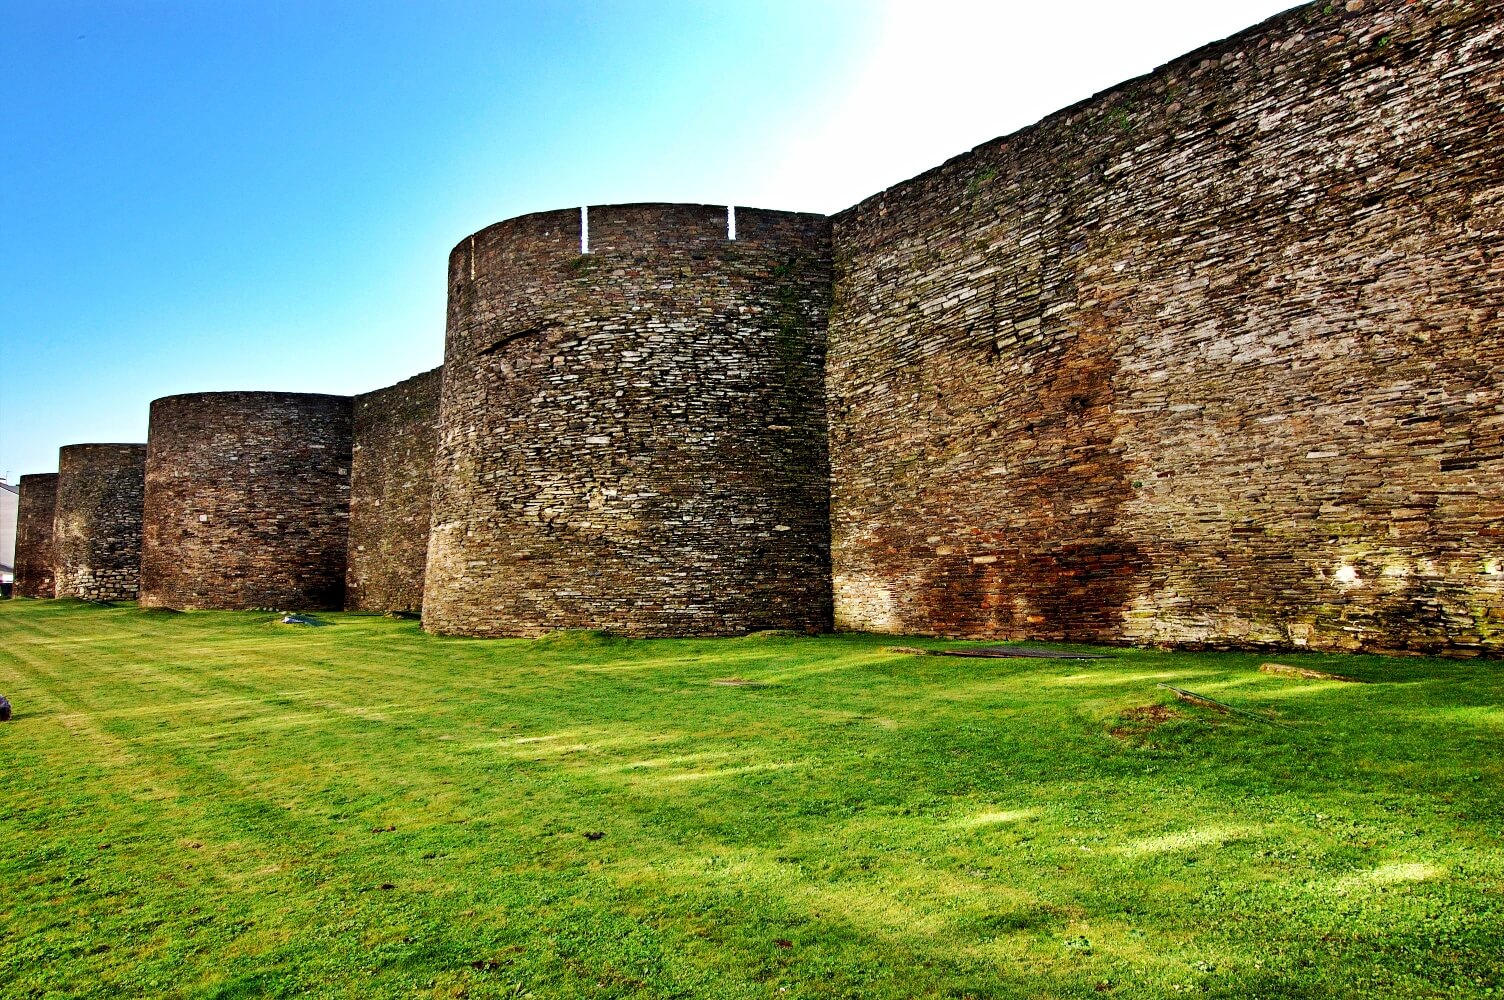 Roman walls of Lugo